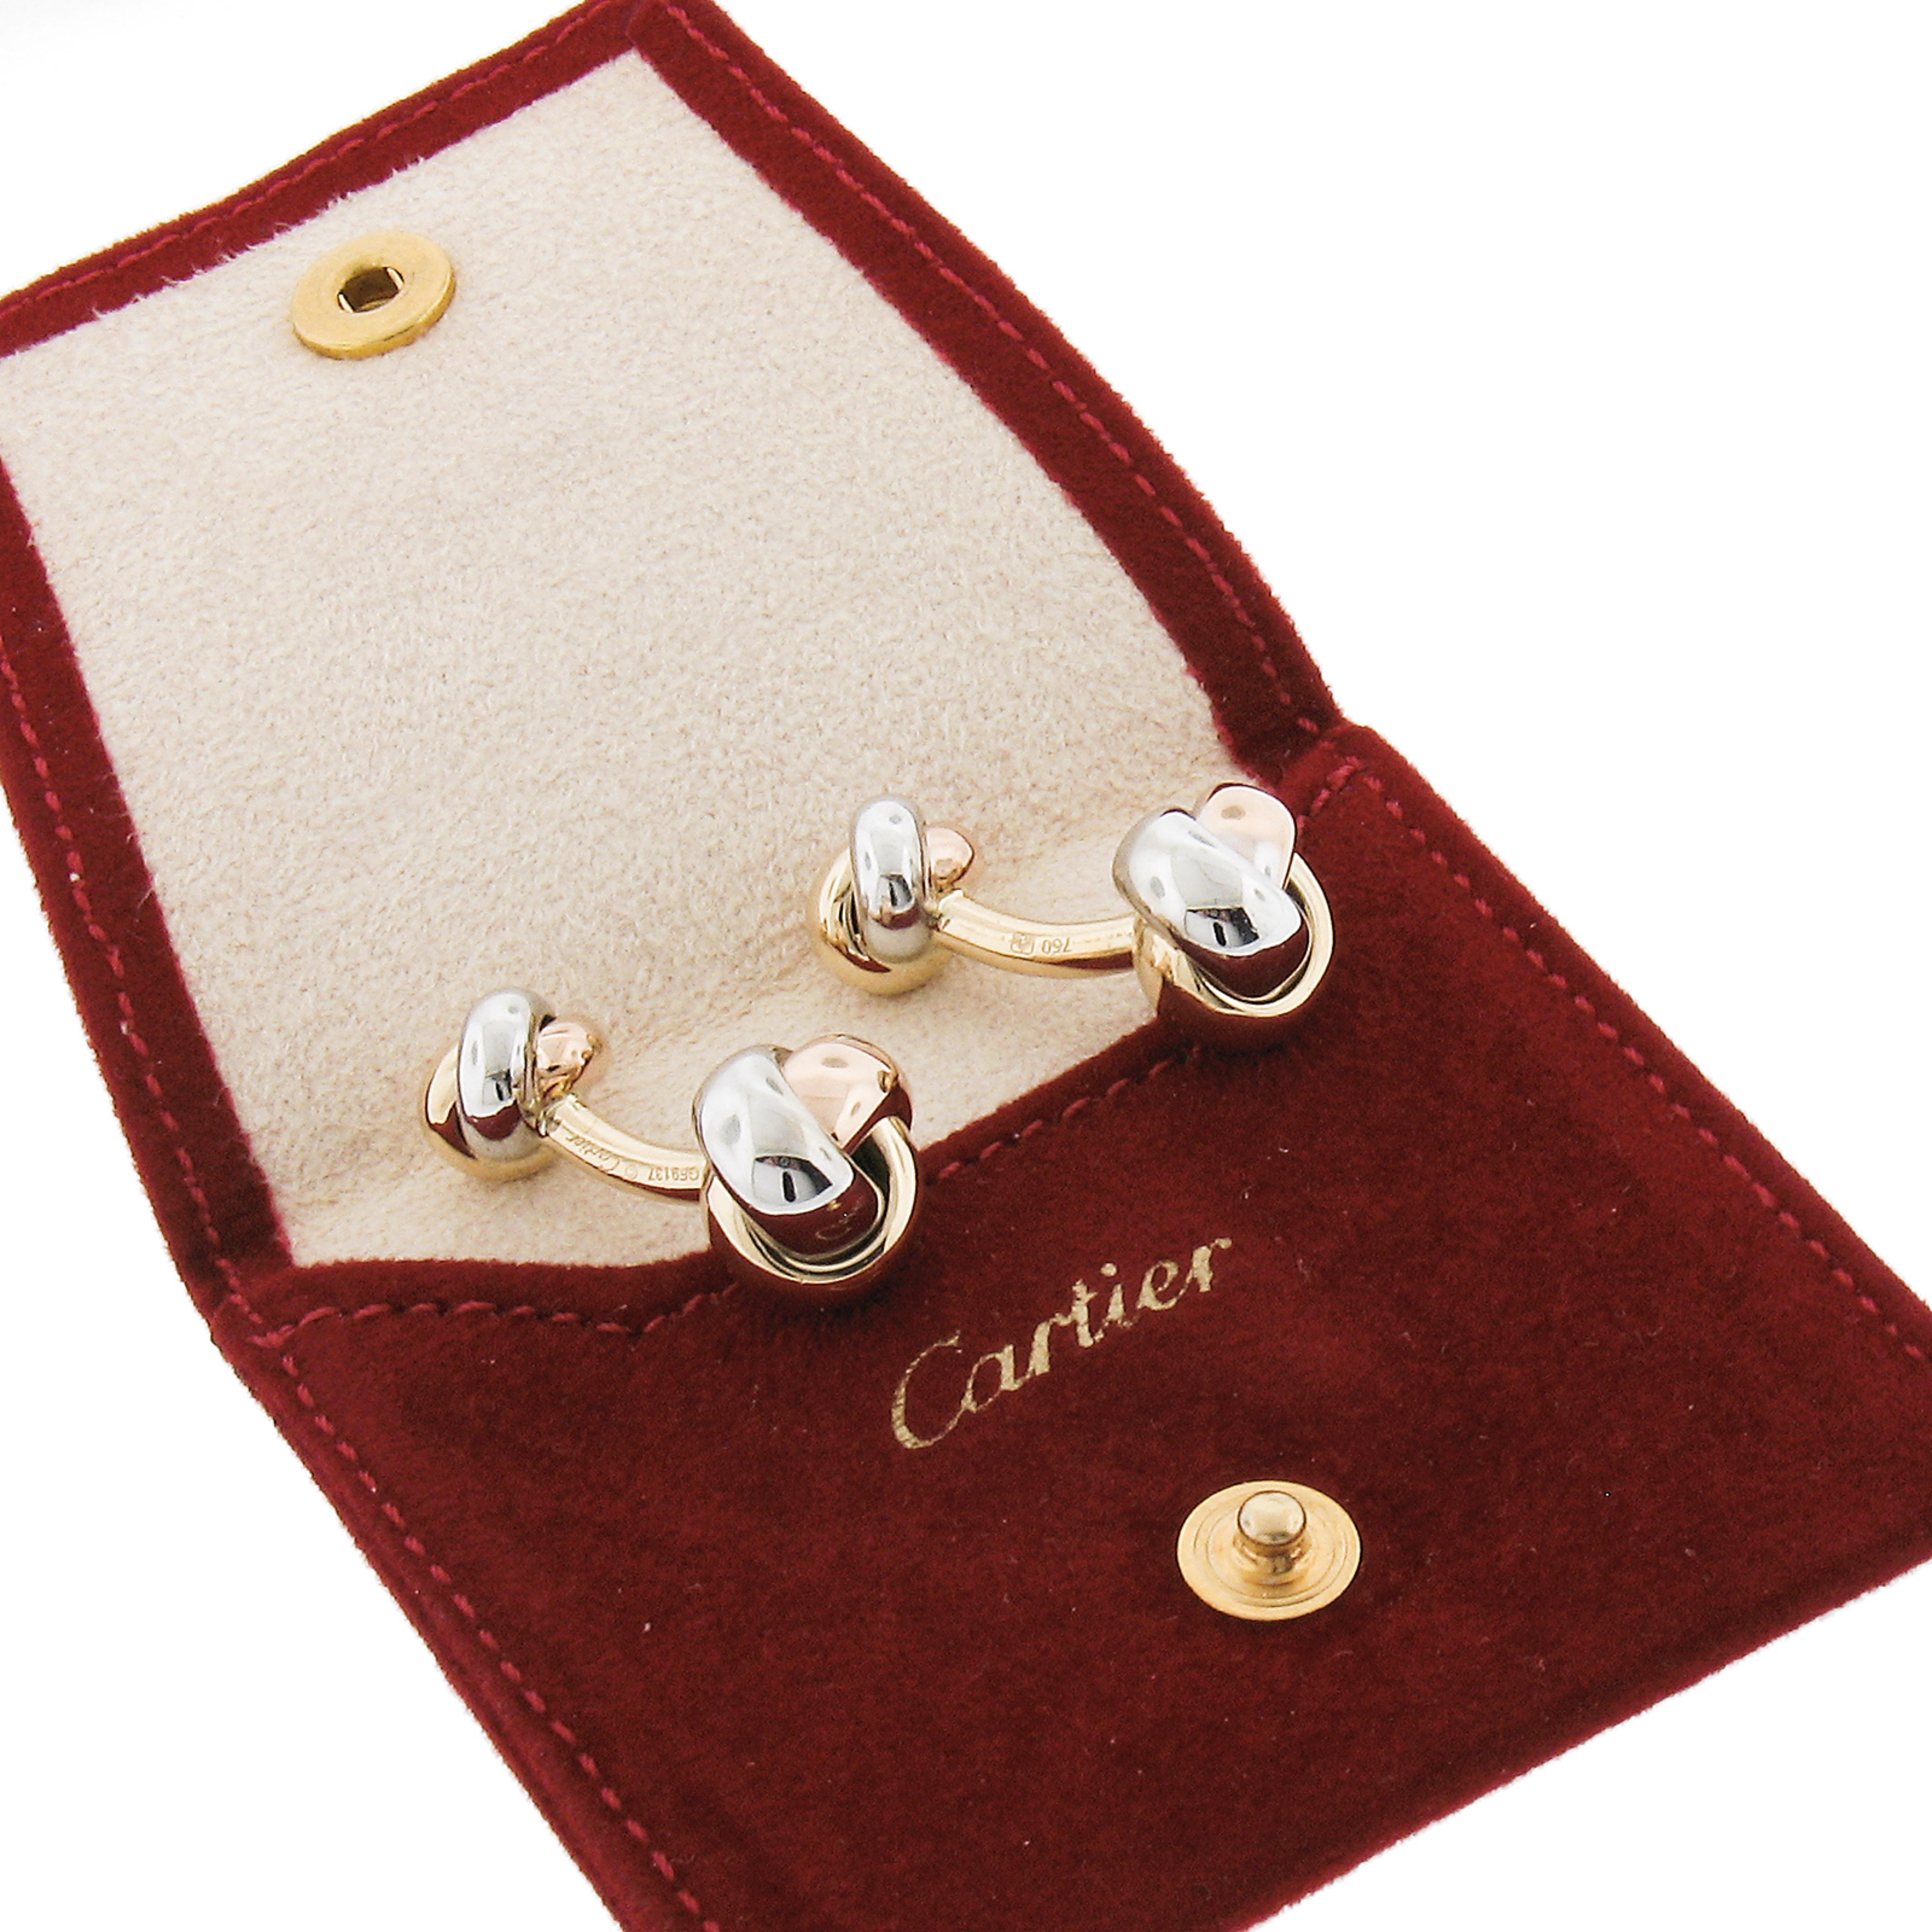 Cartier Men's 18k Tri Color Gold Love Knot Bar Cufflinks W/ Original Pouch For Sale 3